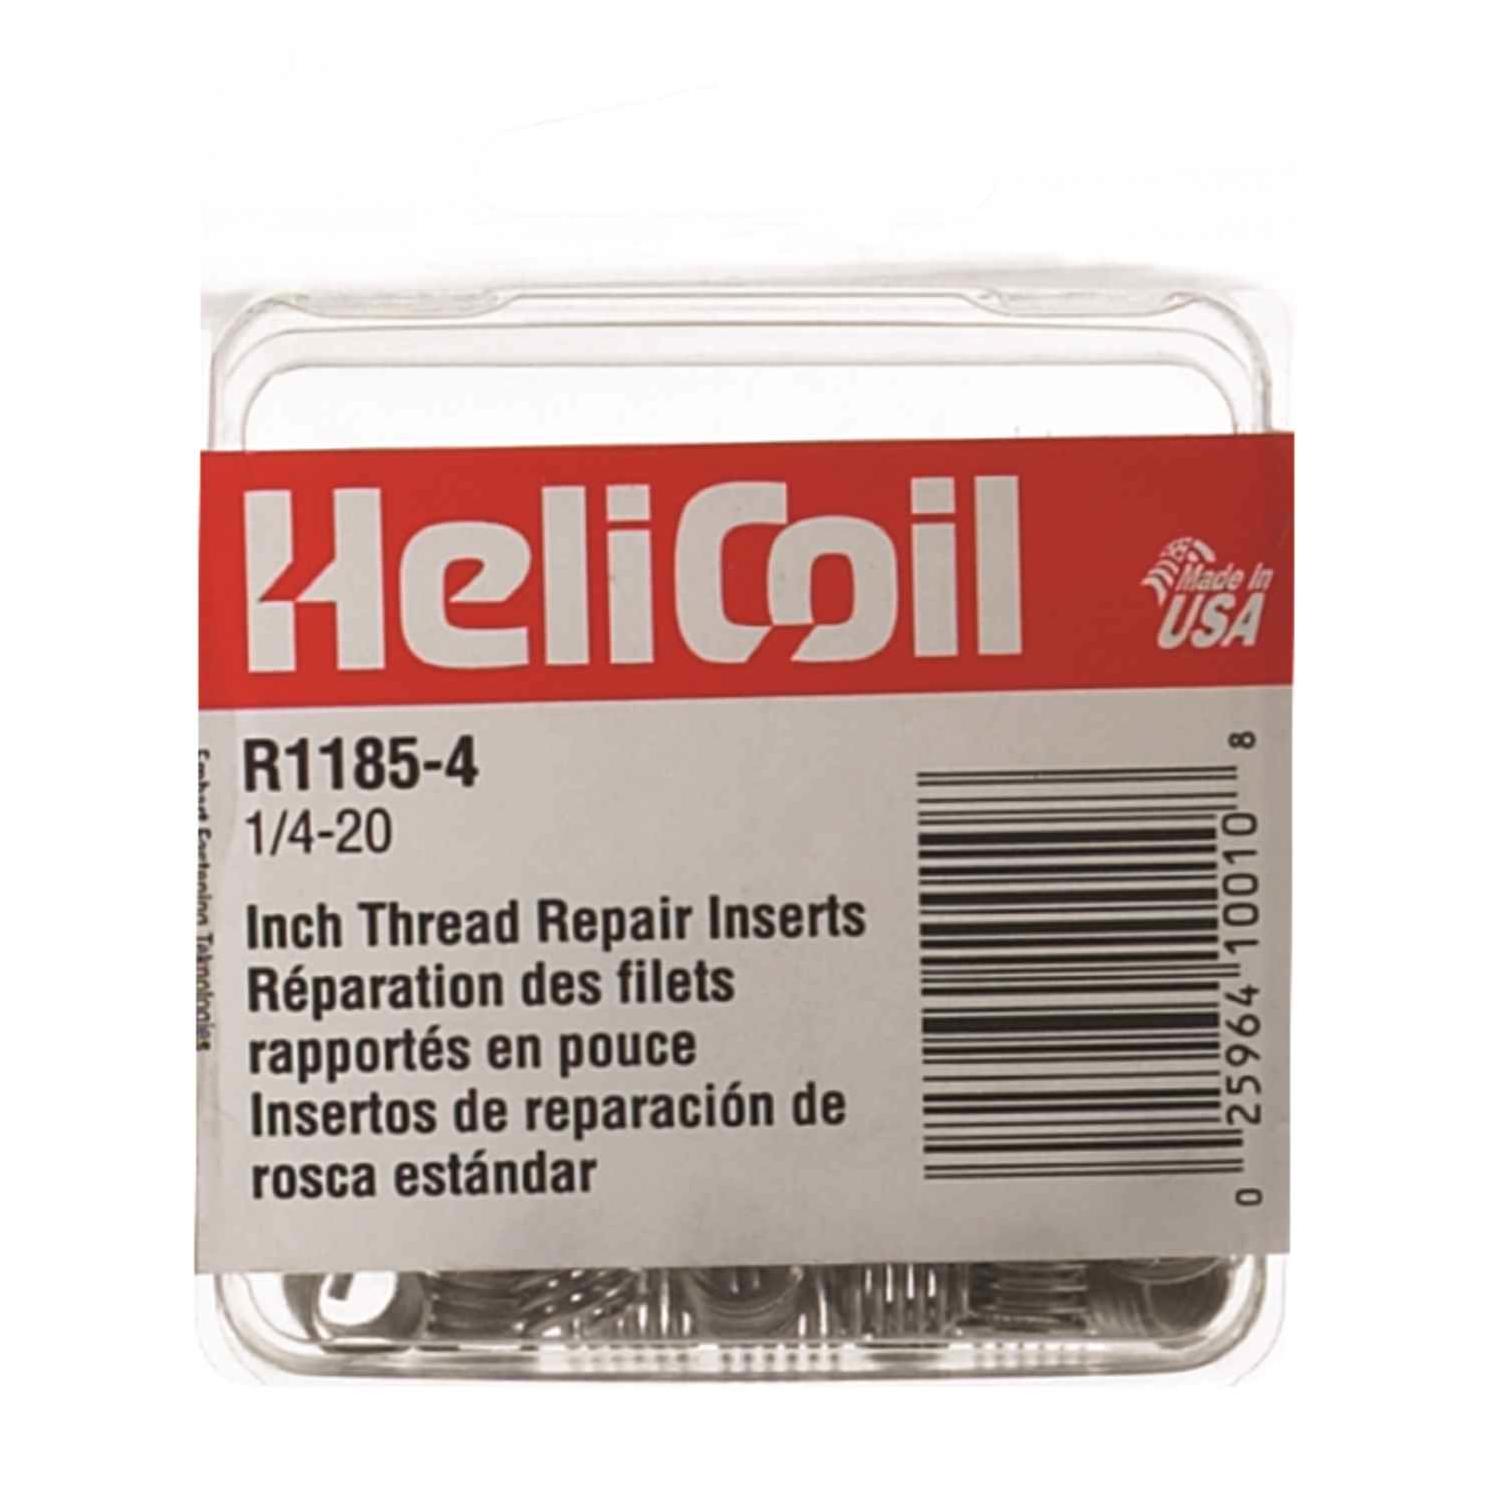 Insert first. Helicoil thread. Helicoil артикул. Heli Coil соединение. Helicoil инструмент Aerospace.